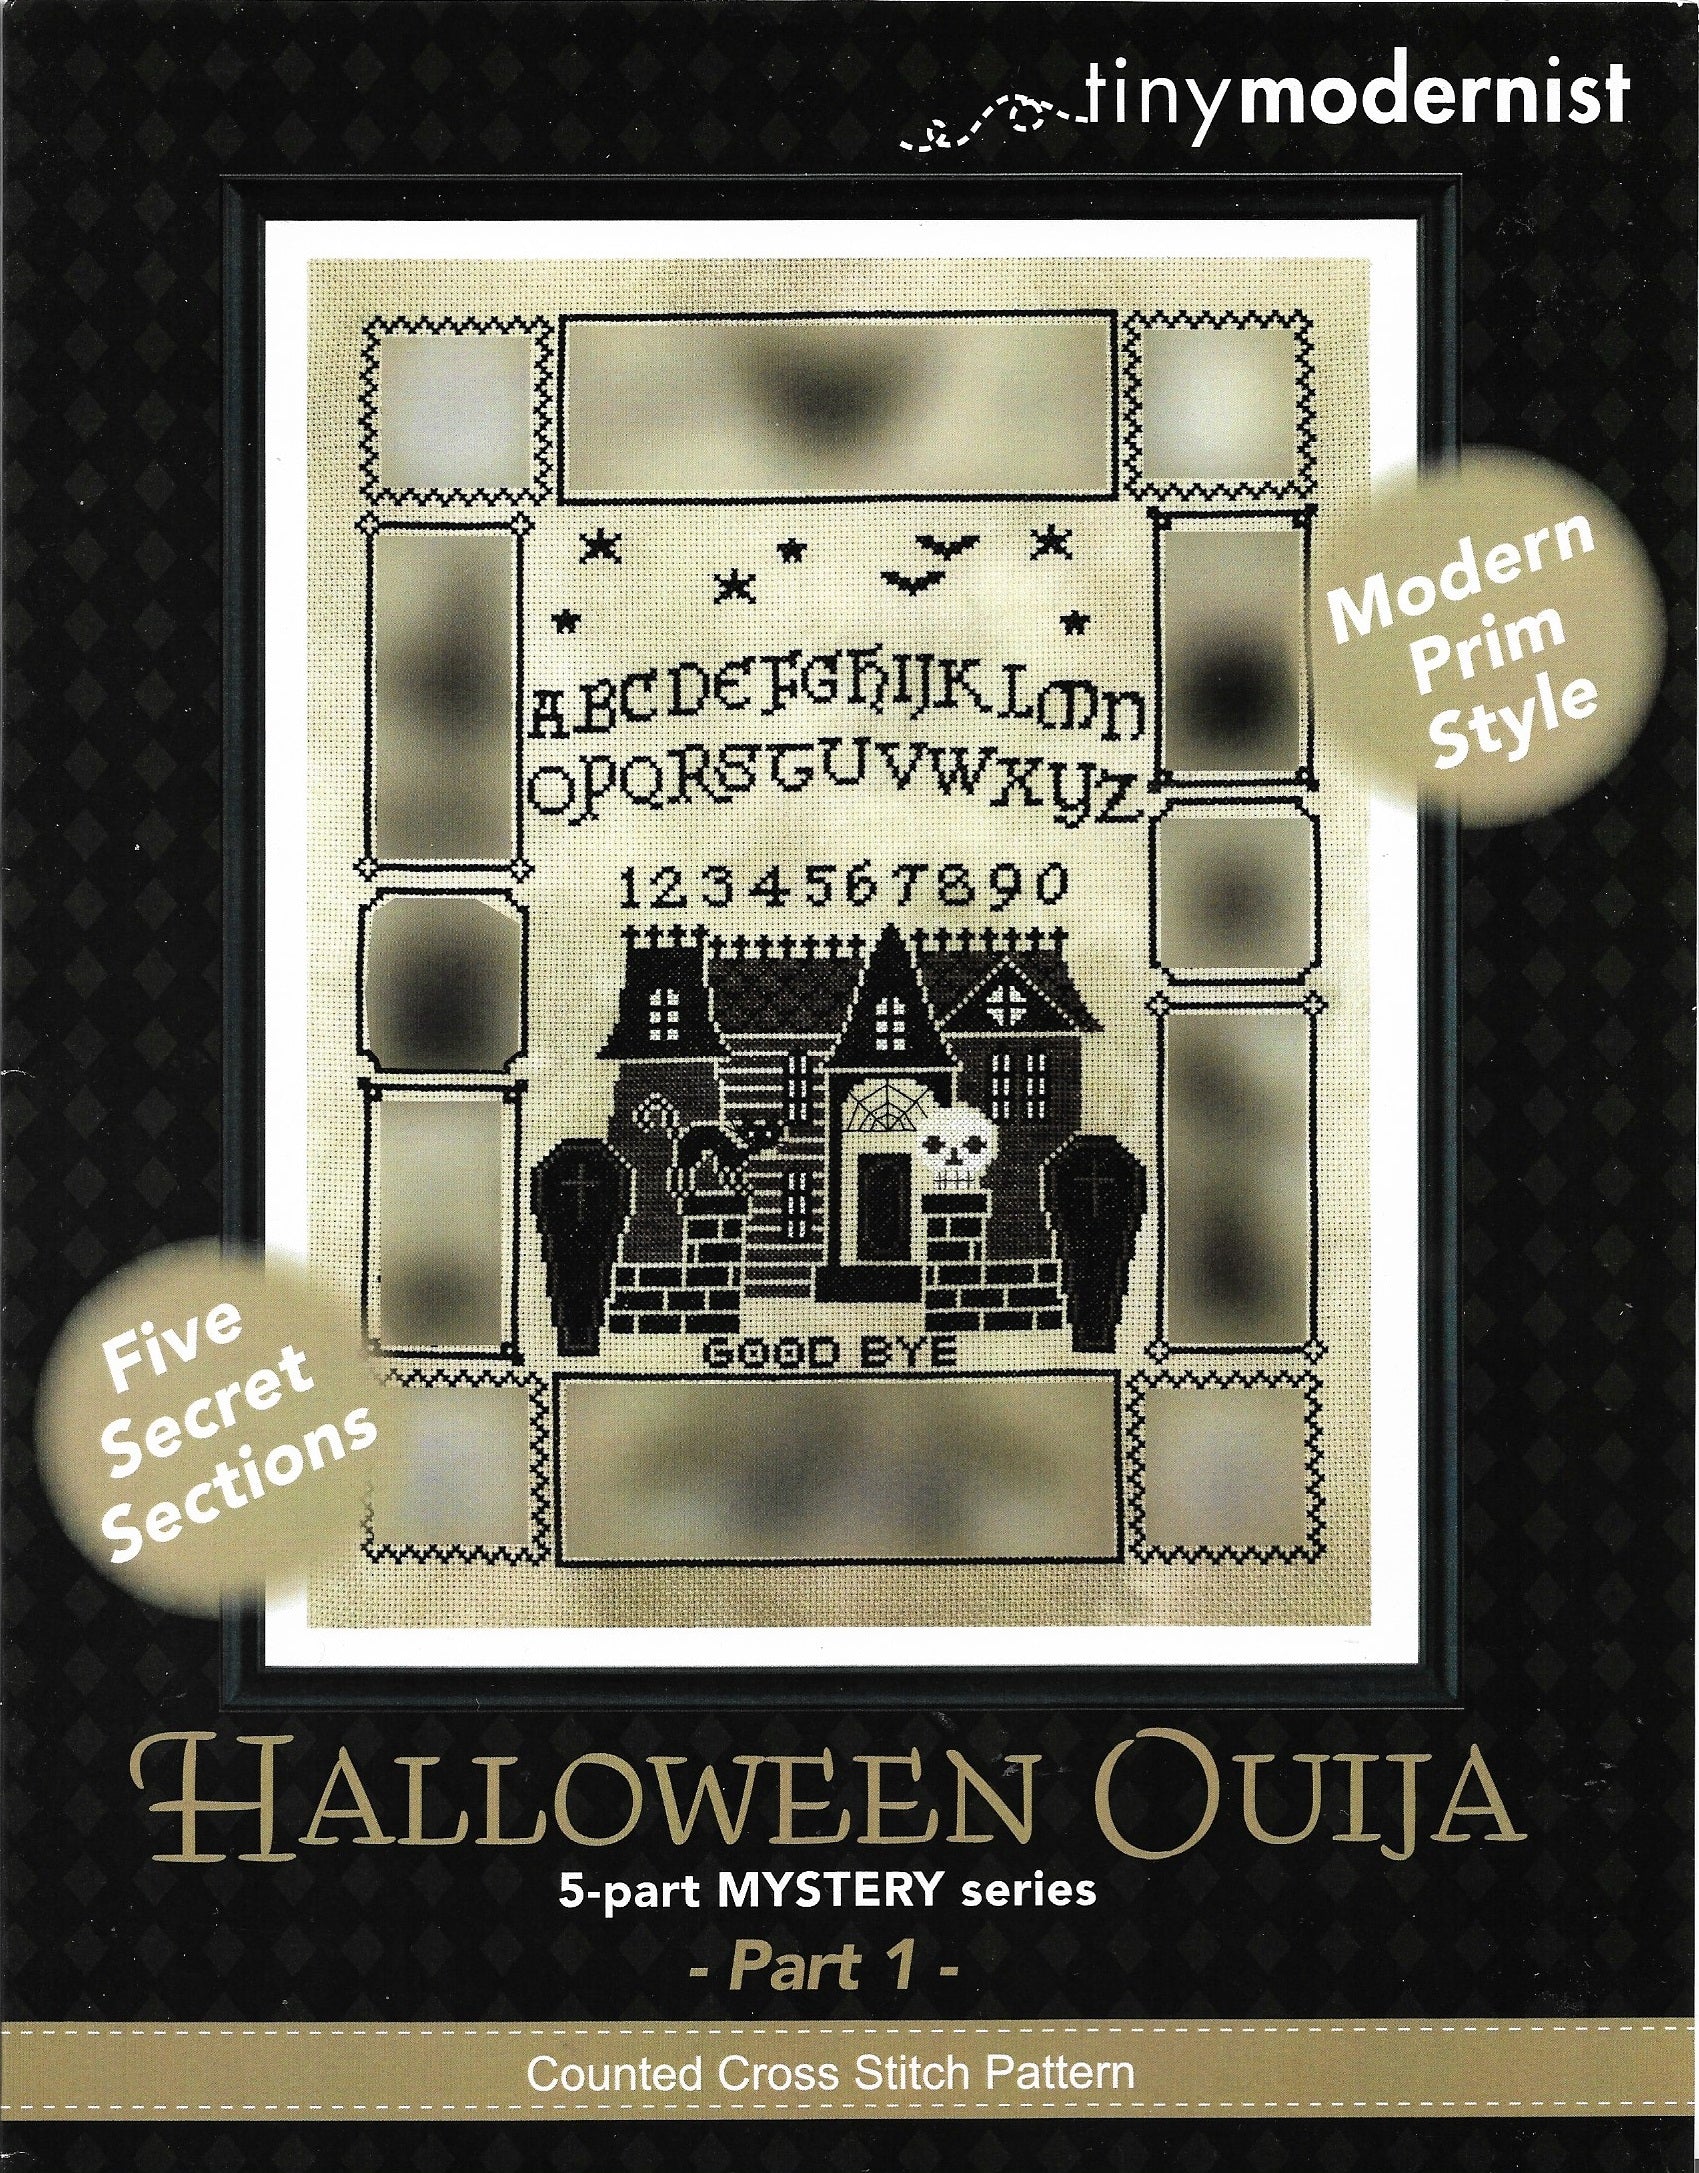 Tiny Modernist Halloween Ouija part 1 cross stitch pattern